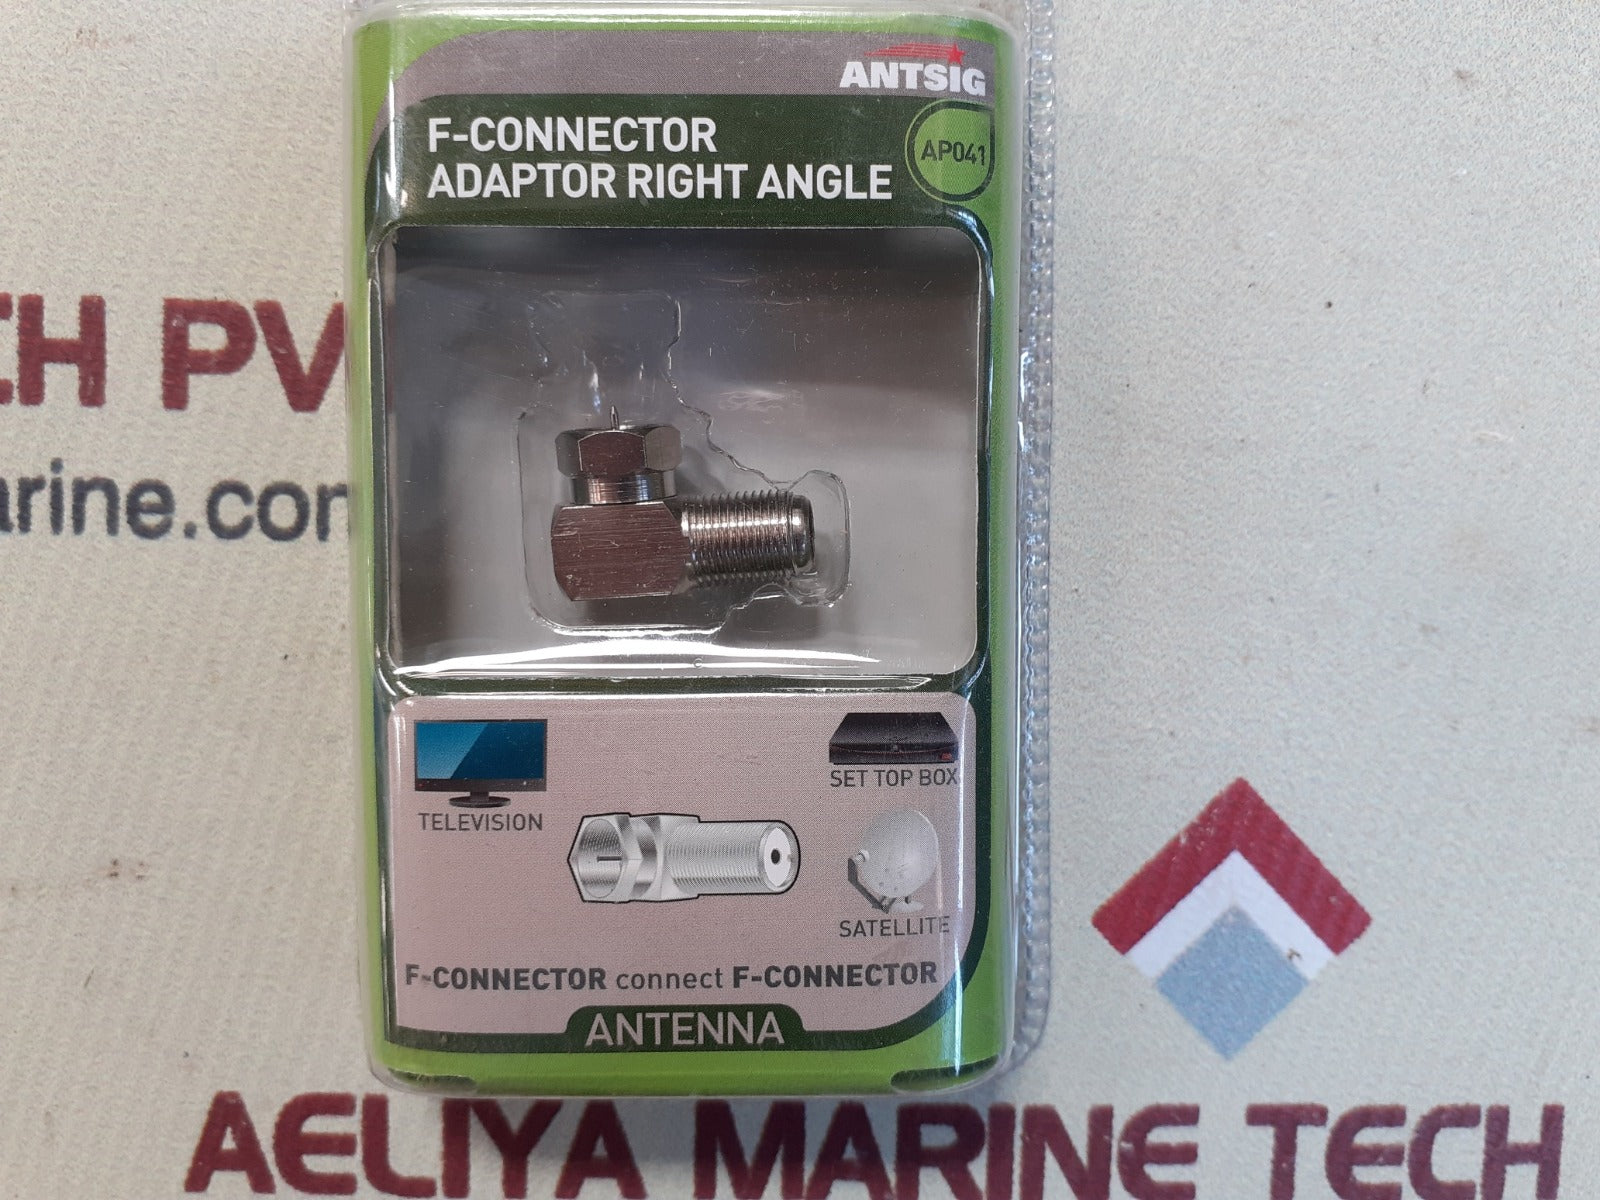 Antsig ap041 f-connector adaptor right angle